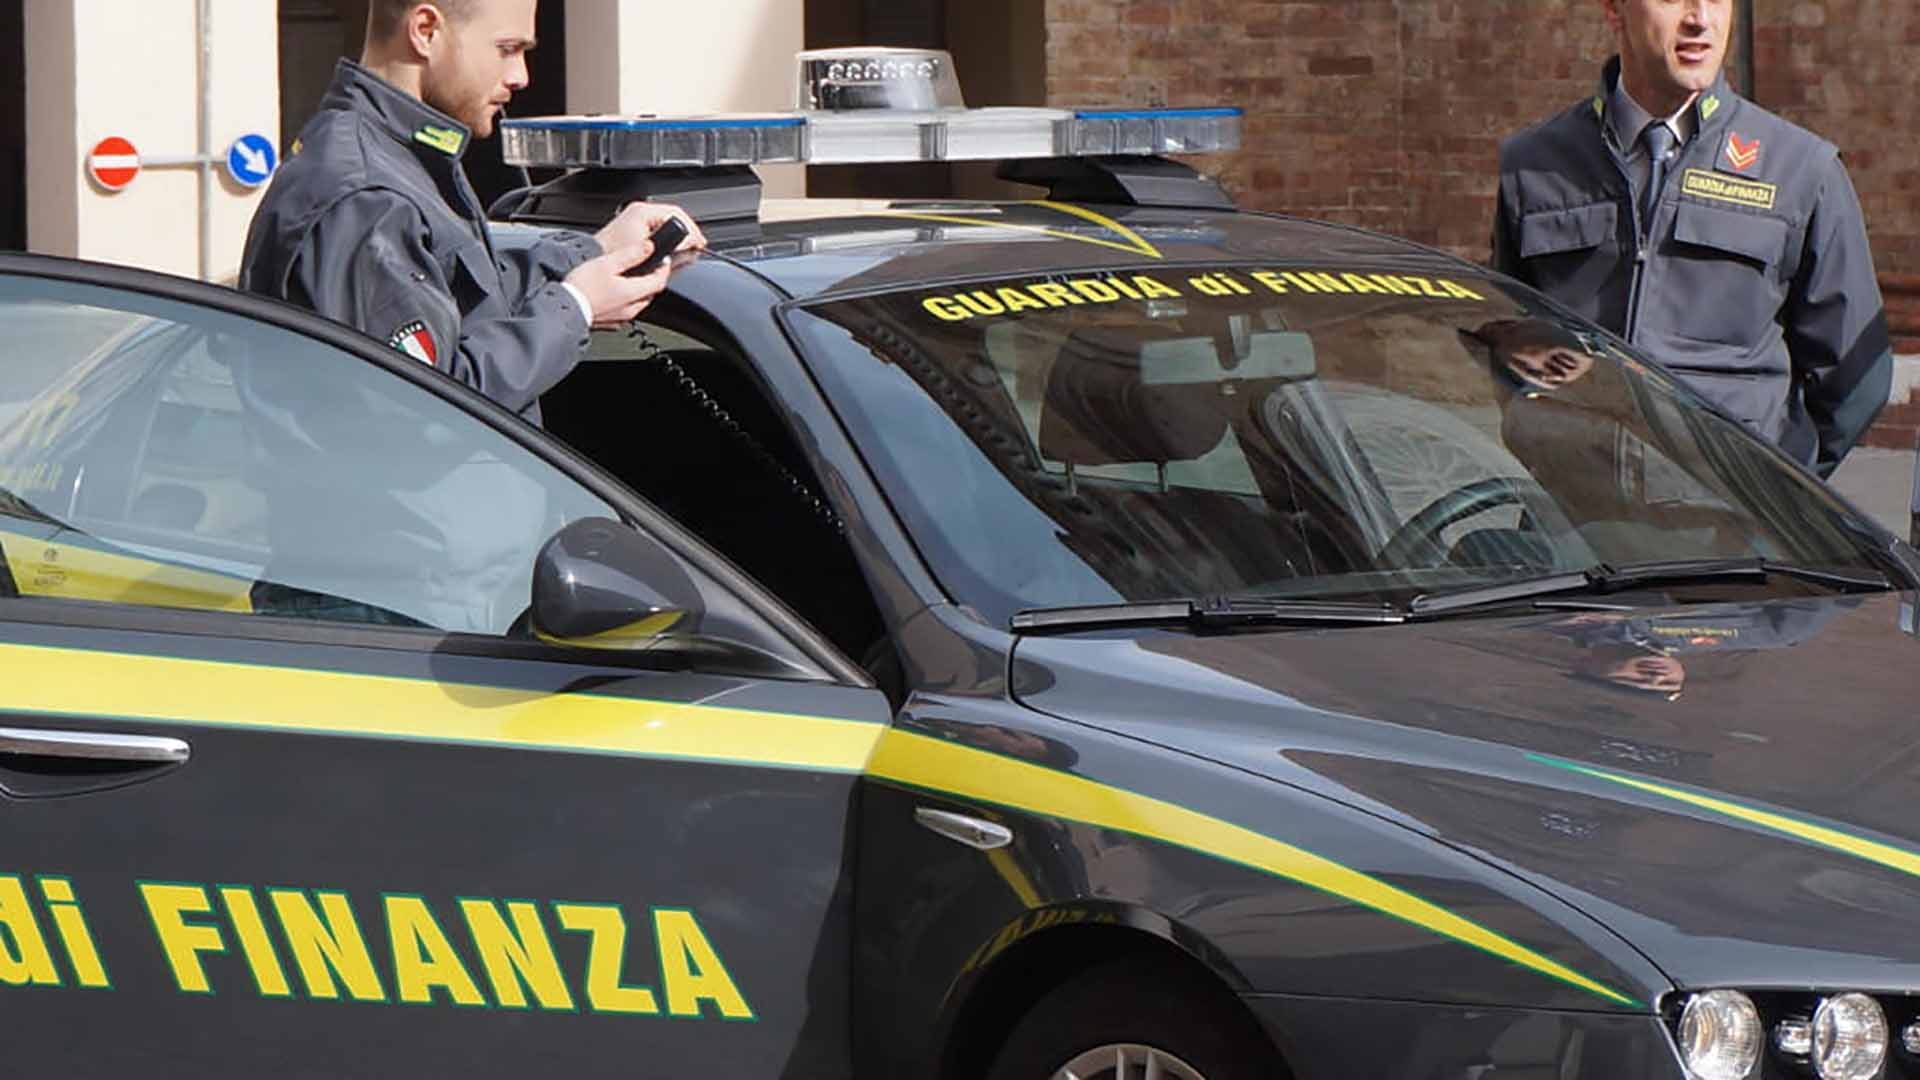 Guardia Finanza_MessinaWebTv_Cronaca